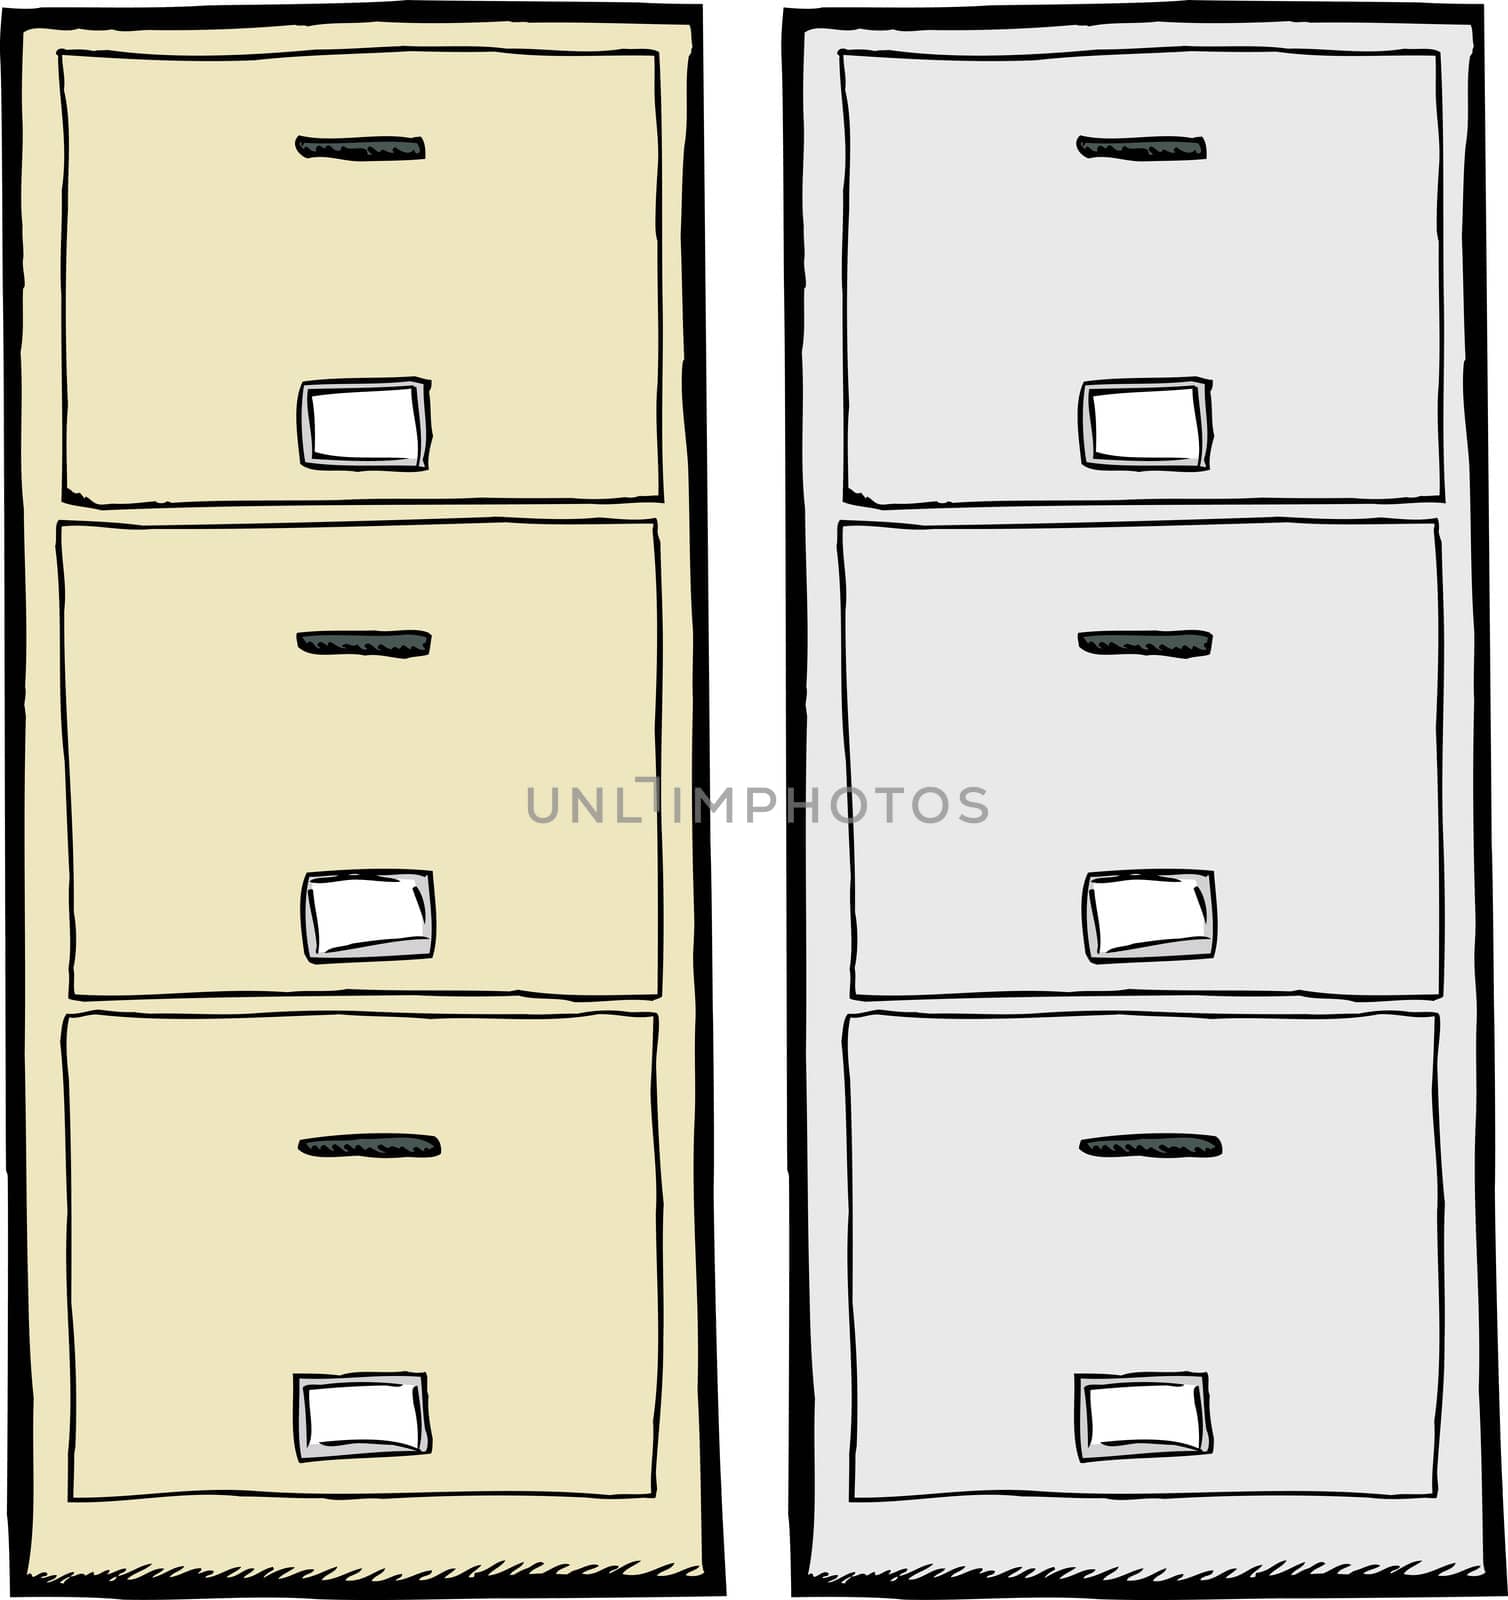 Filing Cabinet Illustration by TheBlackRhino